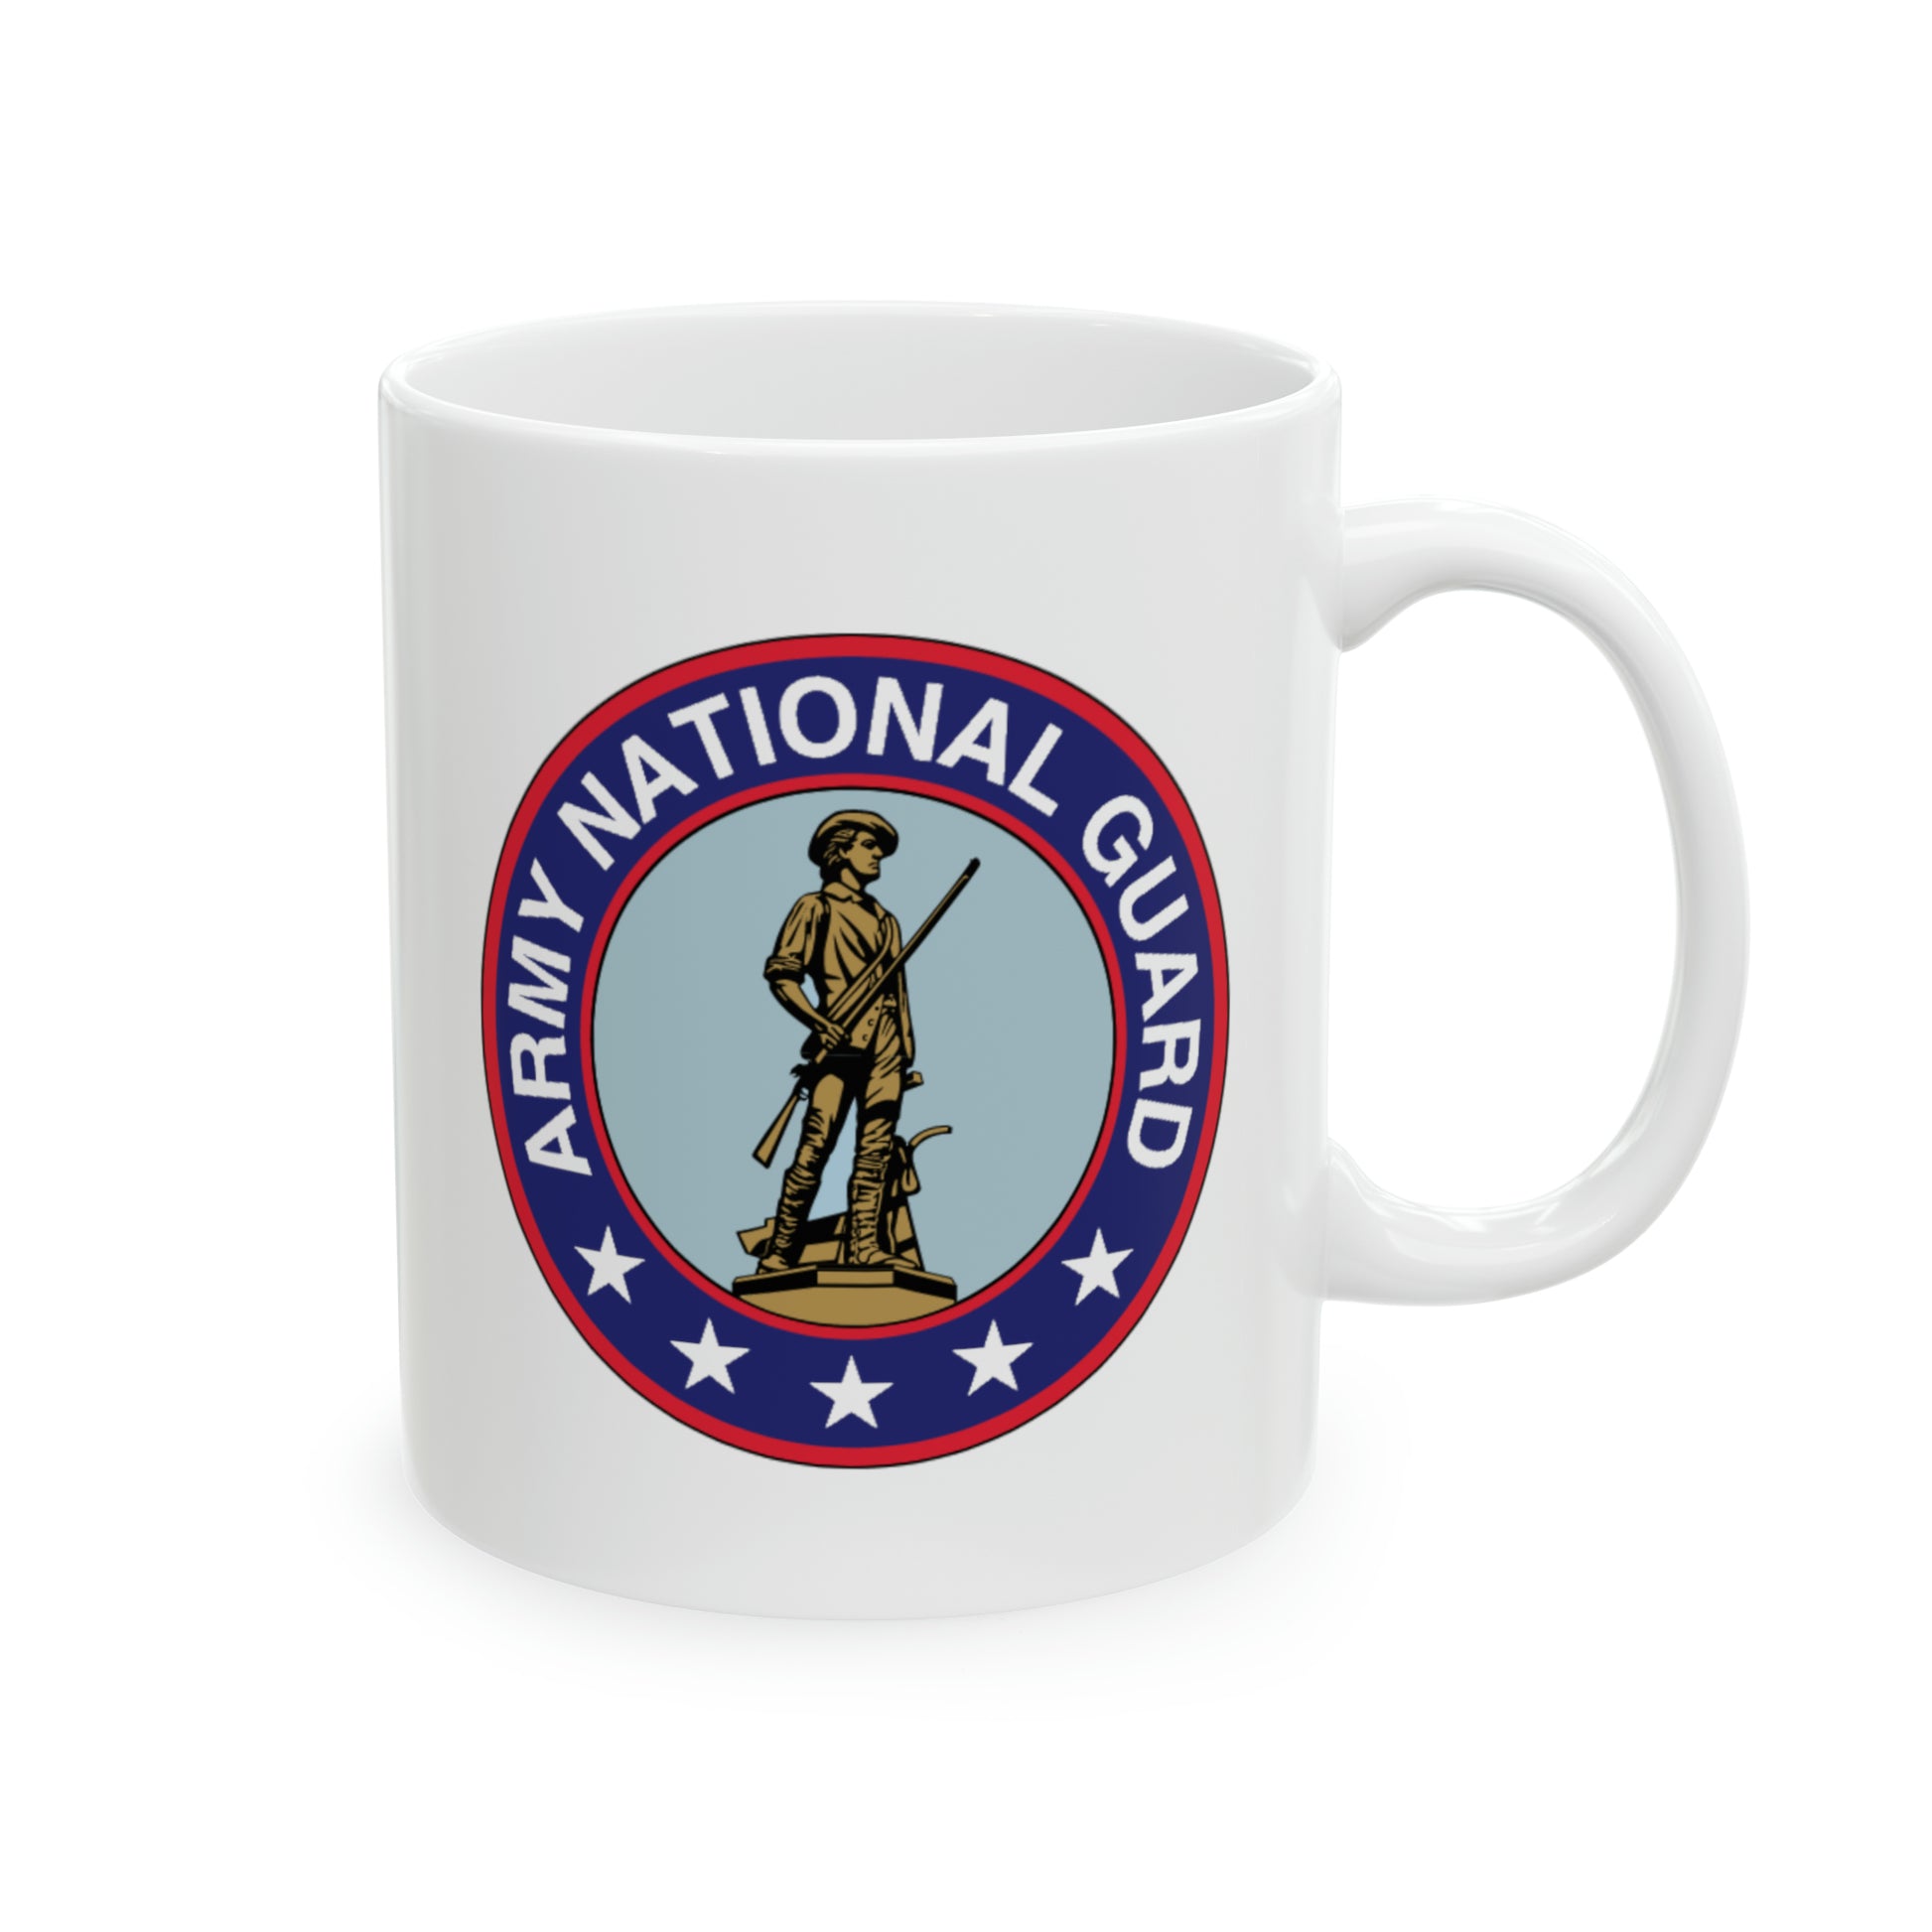 Army National Guard Coffee Mug - Double Sided White Ceramic 11oz by TheGlassyLass.com